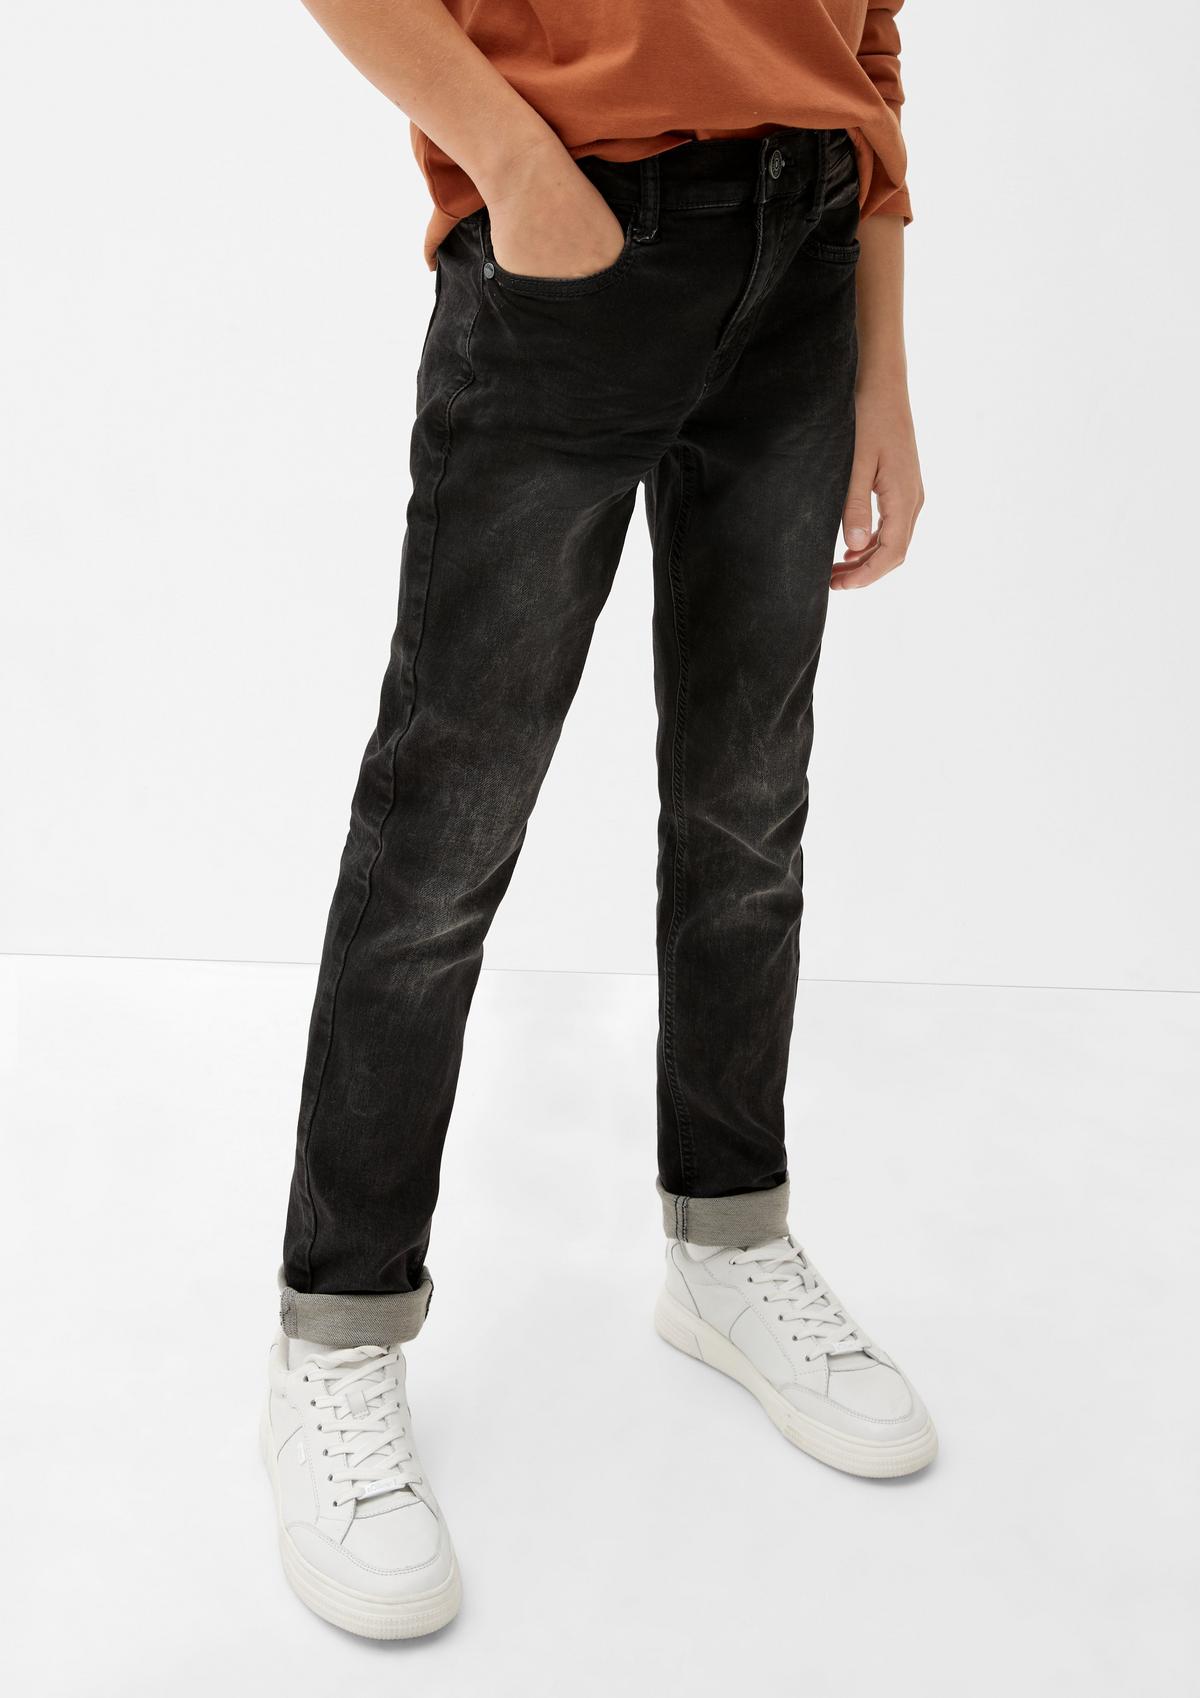 Jeans Seattle / Regular Fit / Mid Rise / Slim Leg